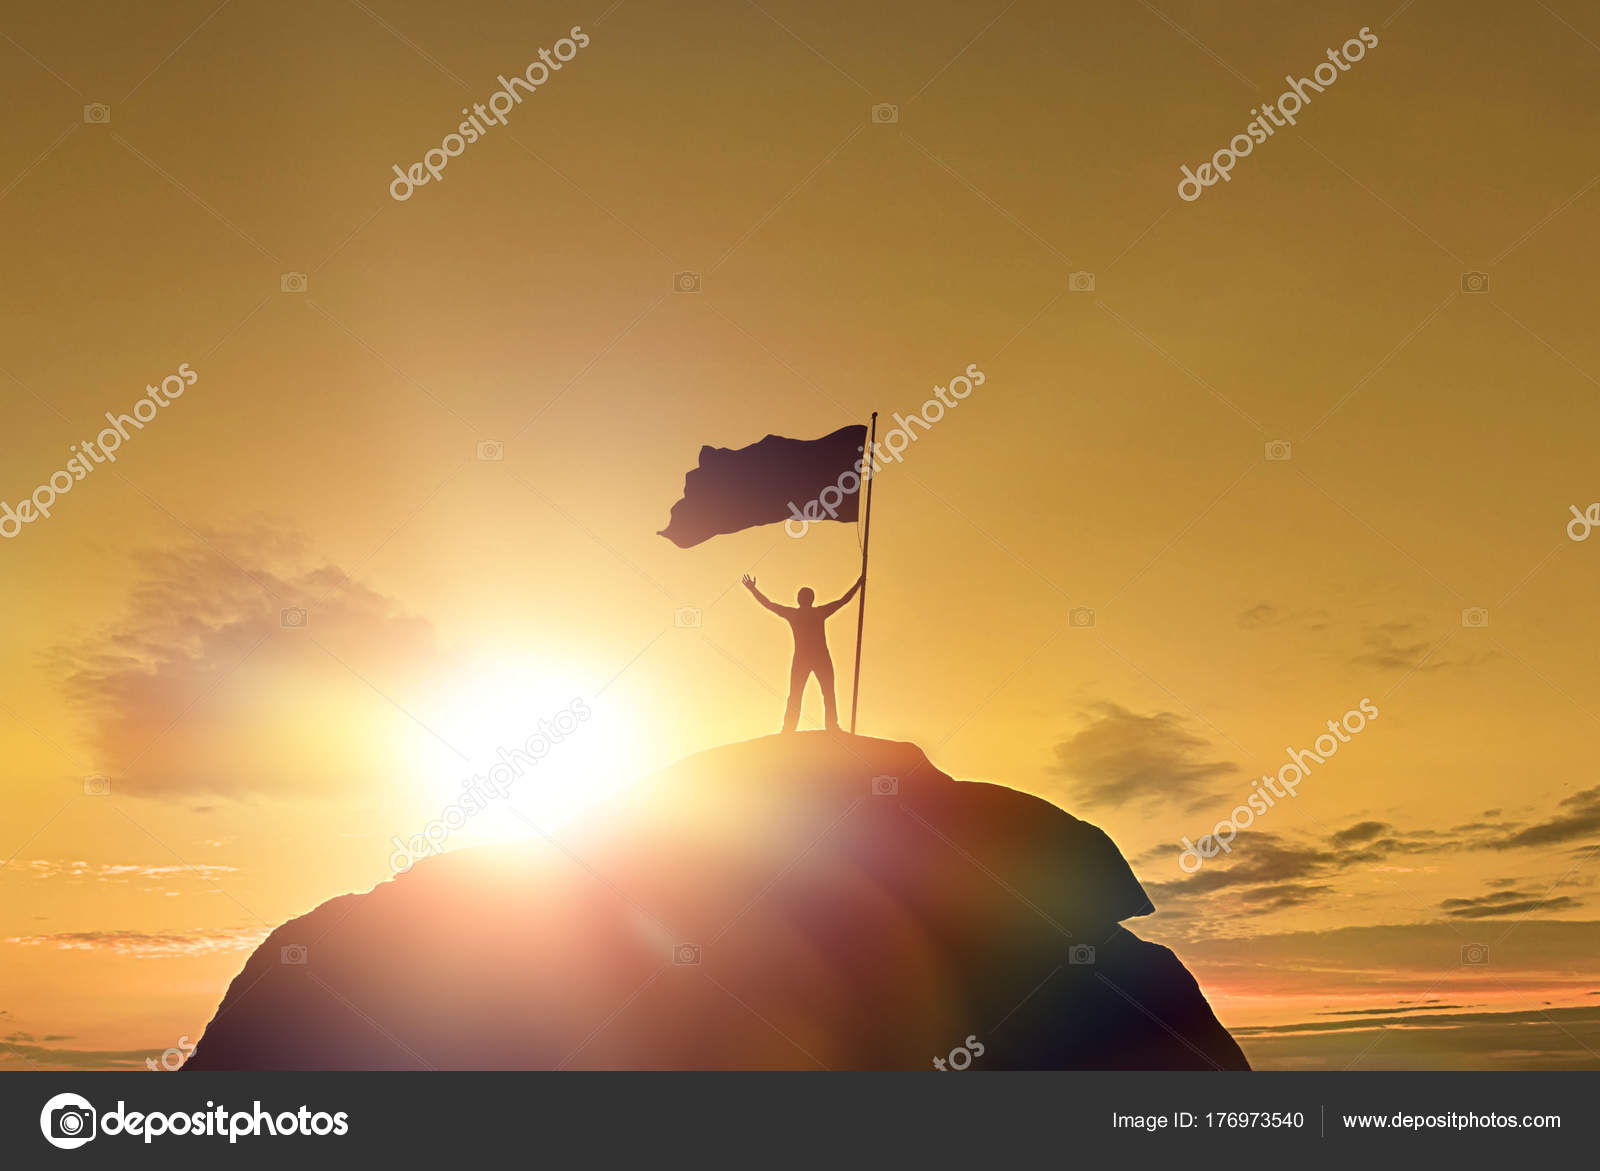 depositphotos_176973540-stock-photo-high-achievement-silhouettes-men-victory.jpg